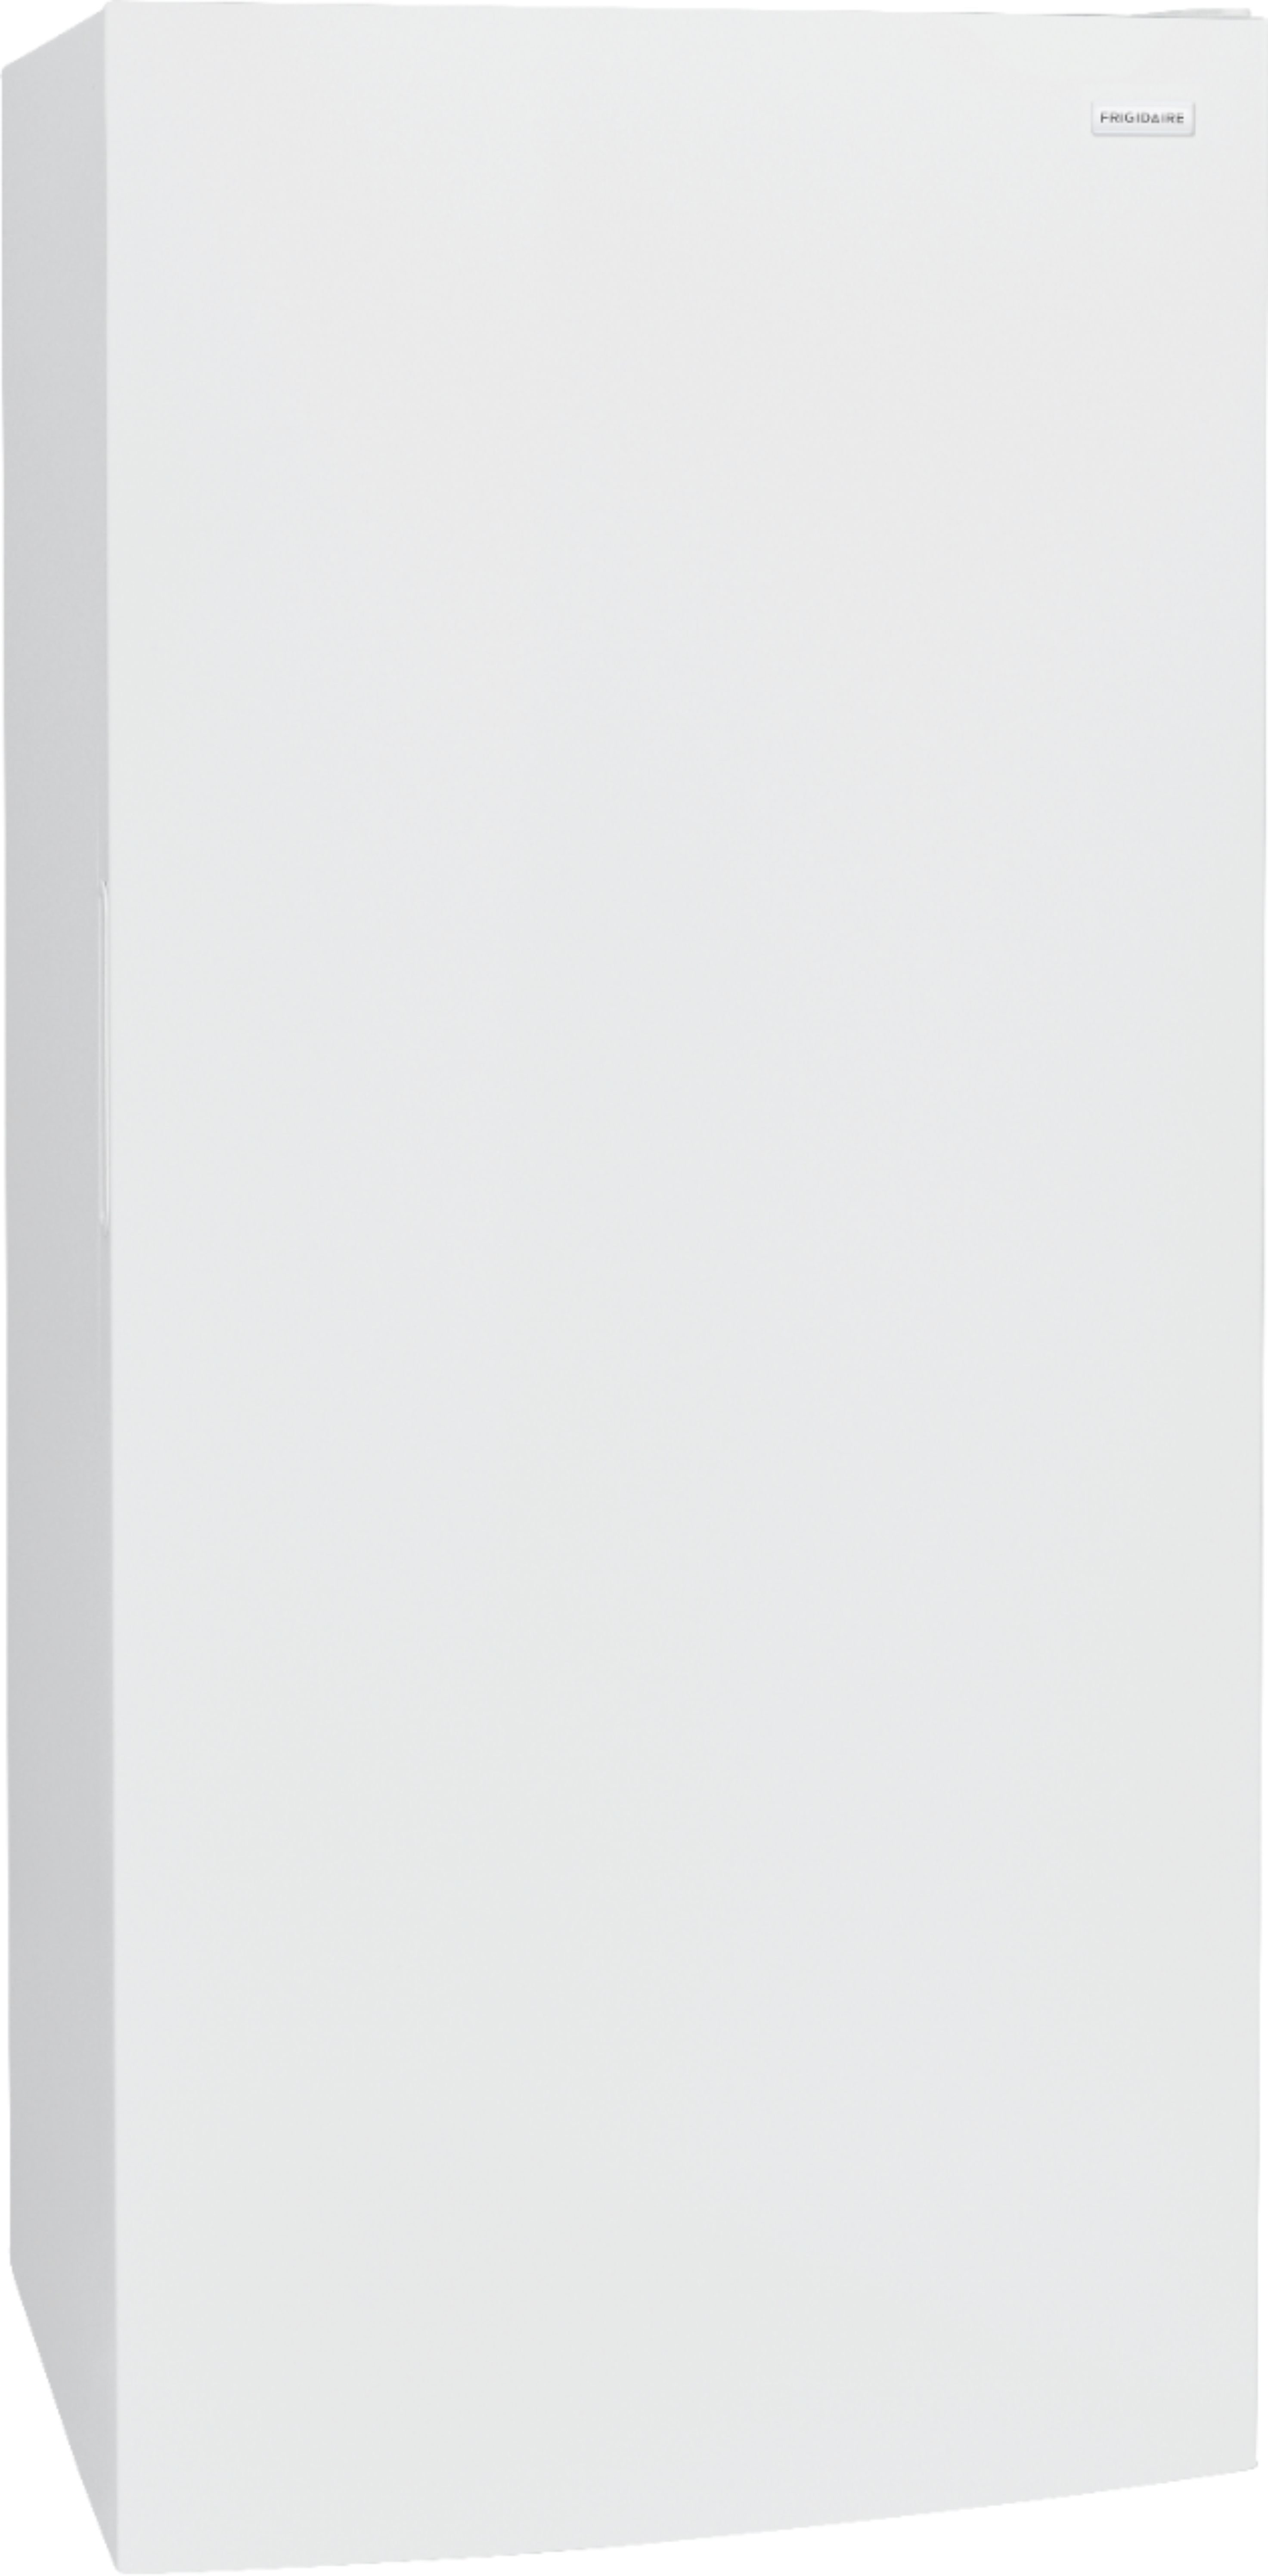 Angle View: JennAir - 13.0 Cu. Ft. Upright Wi-Fi Freezer - Custom Panel Ready